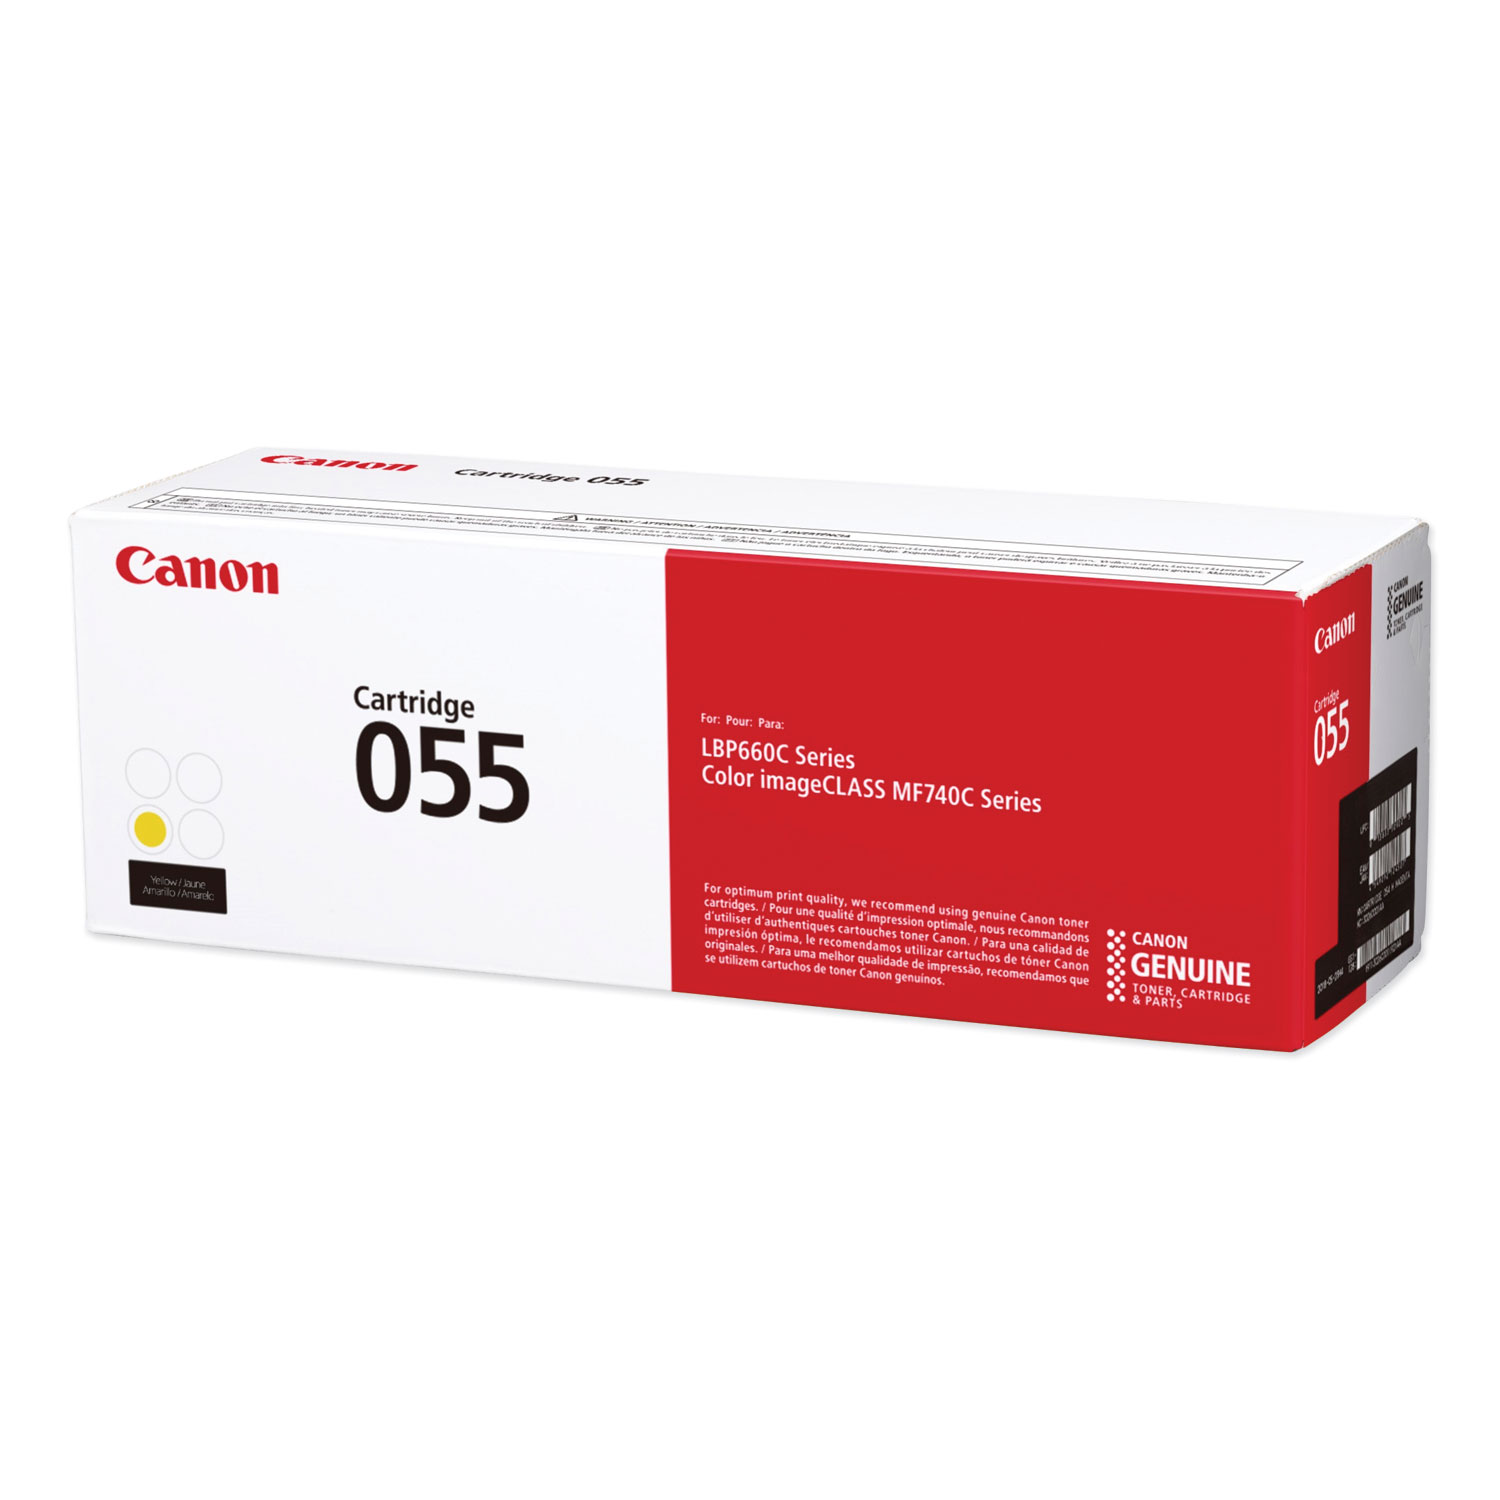  Canon 3013C001 3013C001 (055) Toner, 2,100 Page-Yield, Yellow (CNM3013C001) 